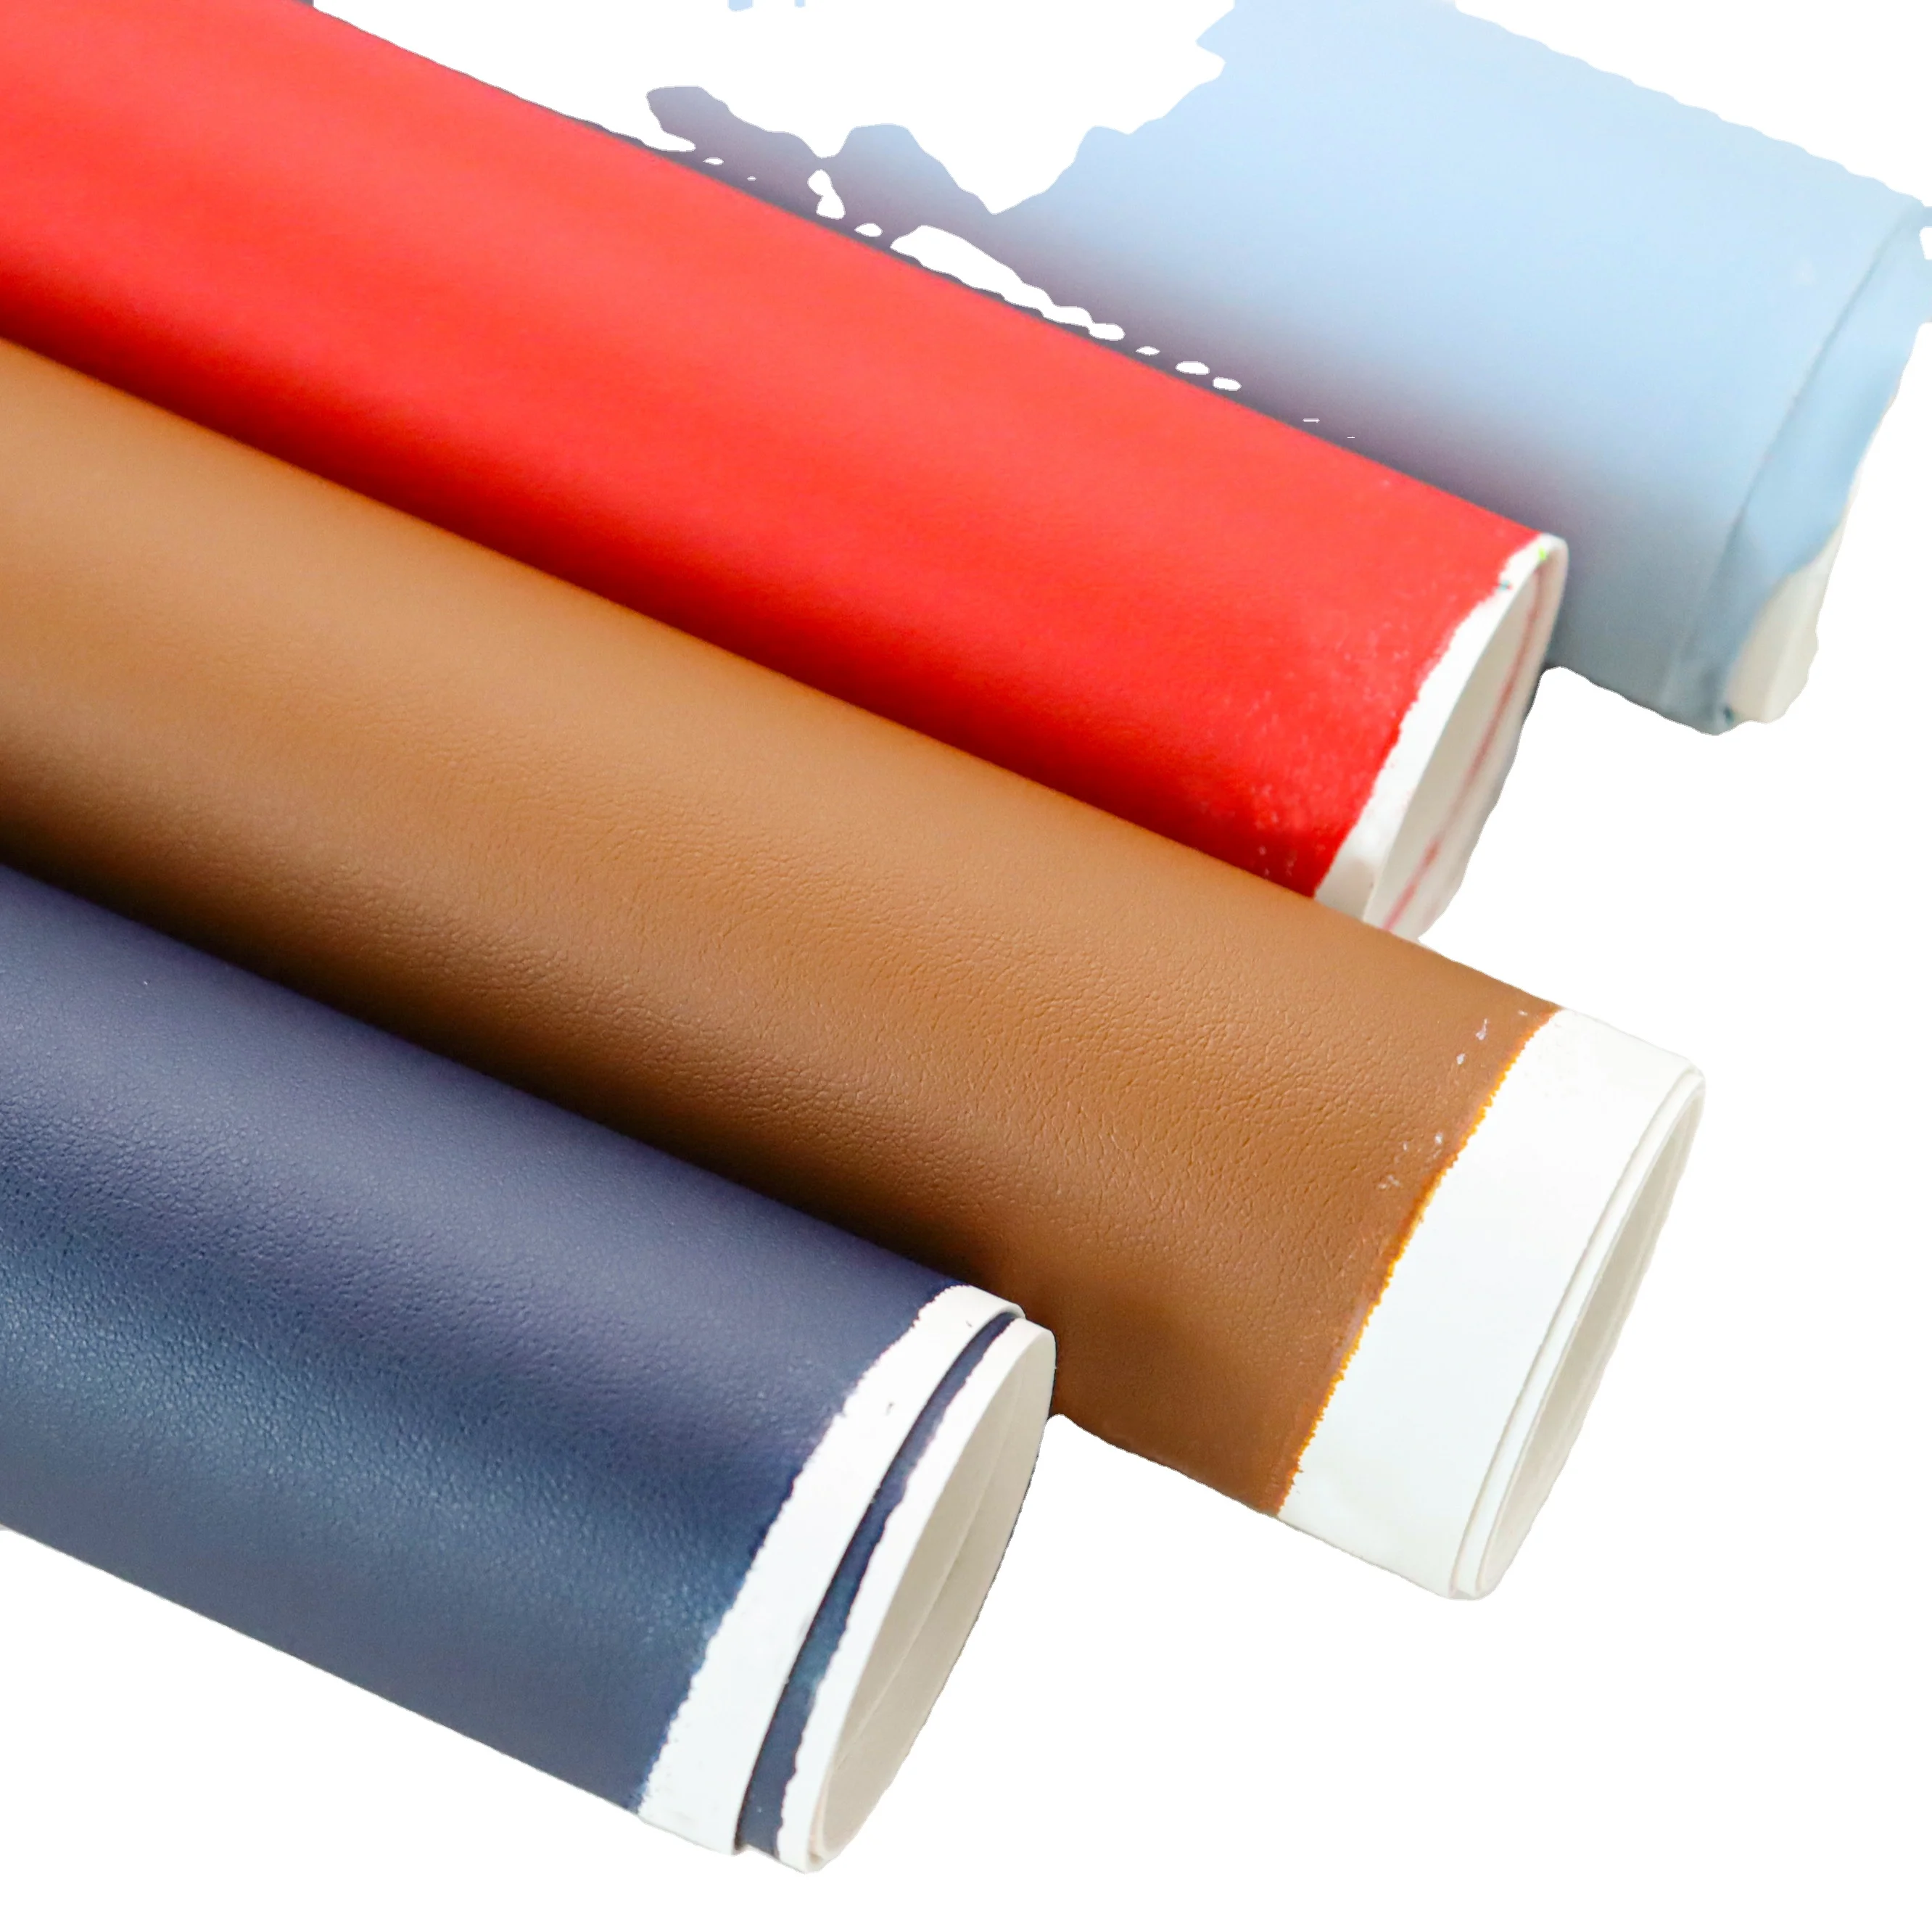 Cigno Leather - NEW Sustainable Plant Fiber Bio-Based Leather Rolls for Handbag & Shoe Upper Materials